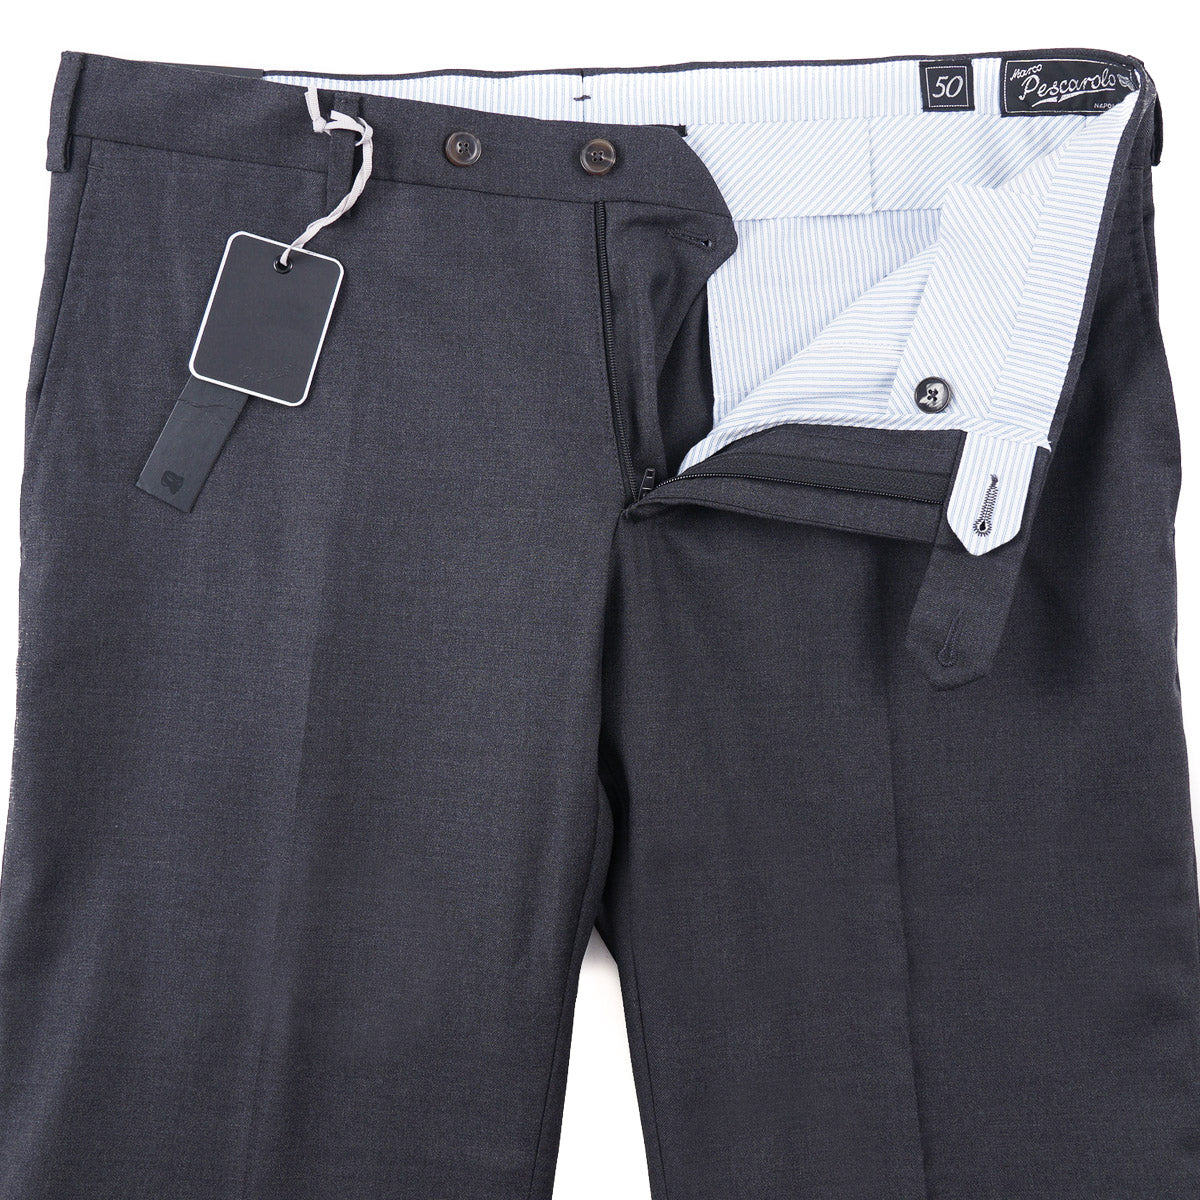 Marco Pescarolo Solid Charcoal Wool Pants - Top Shelf Apparel